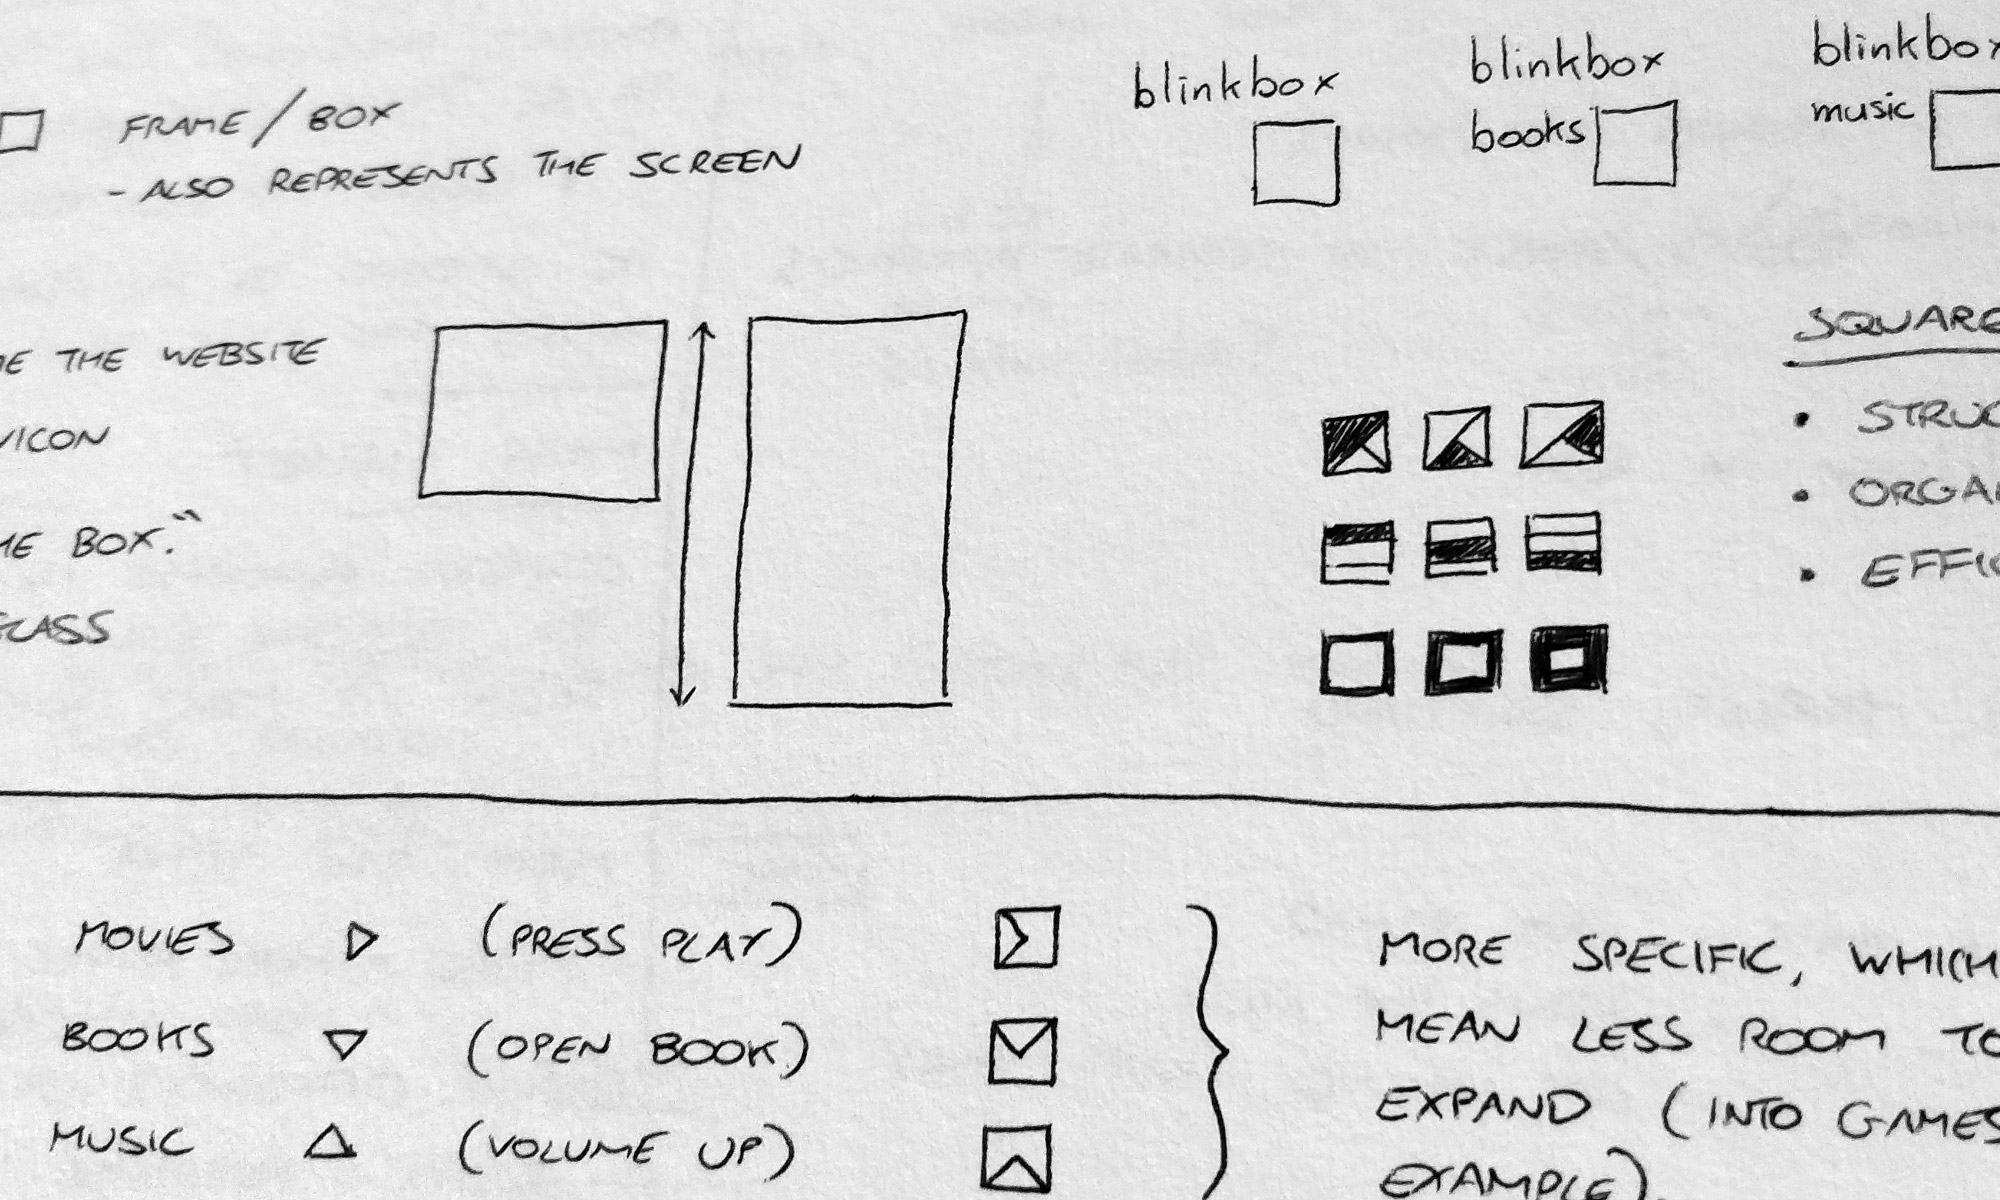 Blinkbox sketches